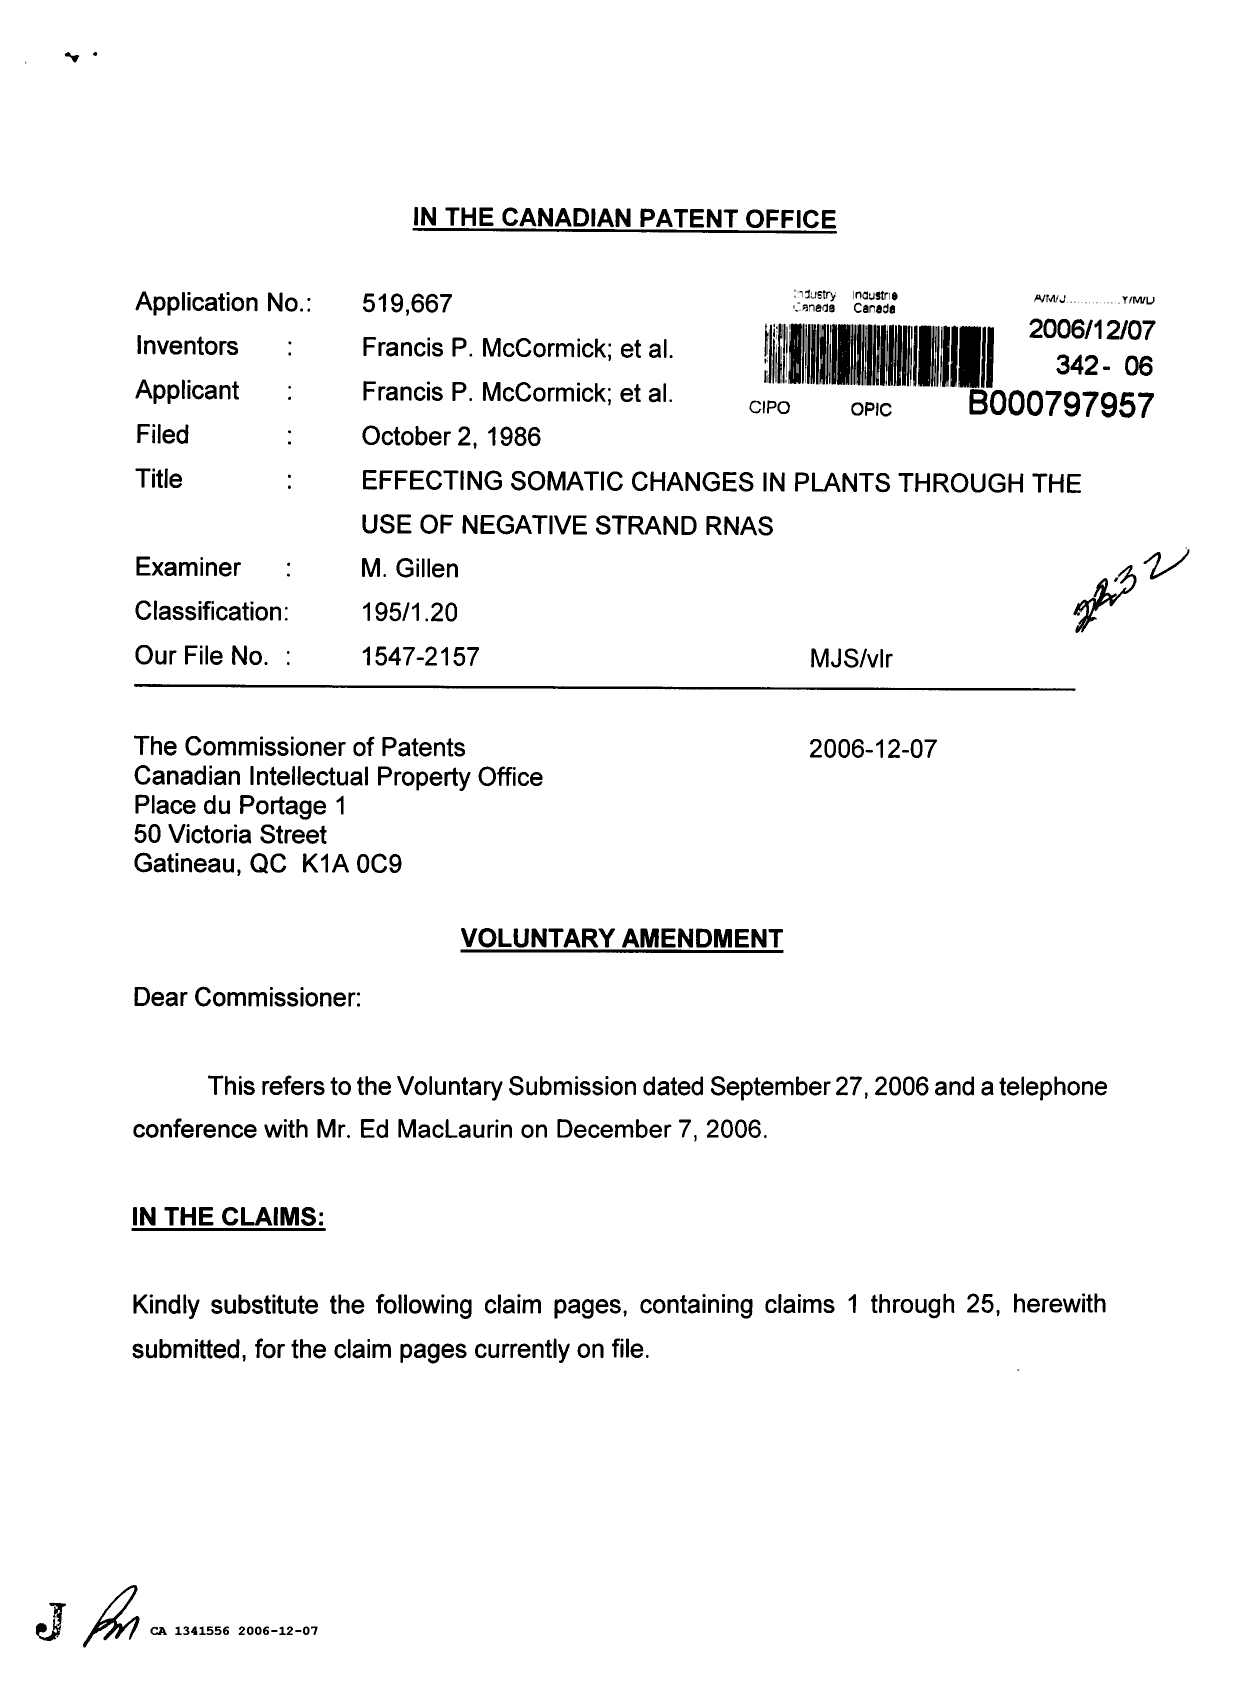 Canadian Patent Document 1341556. Prosecution Correspondence 20061207. Image 1 of 2